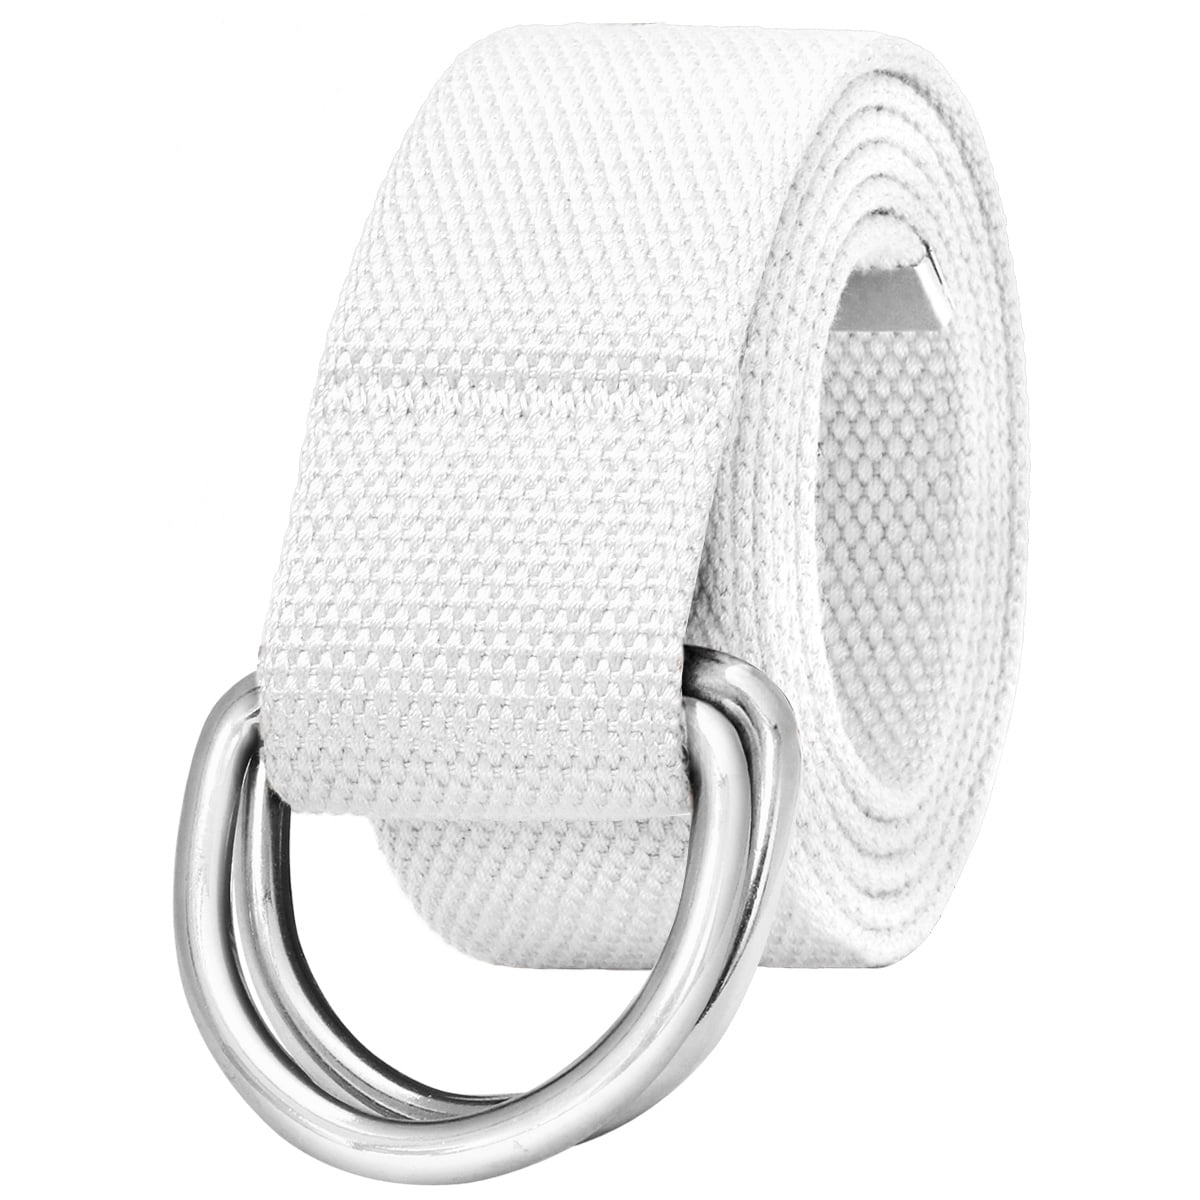 Falari Canvas Web Belt Metal Double D Ring Buckle for Men Women Casual ...